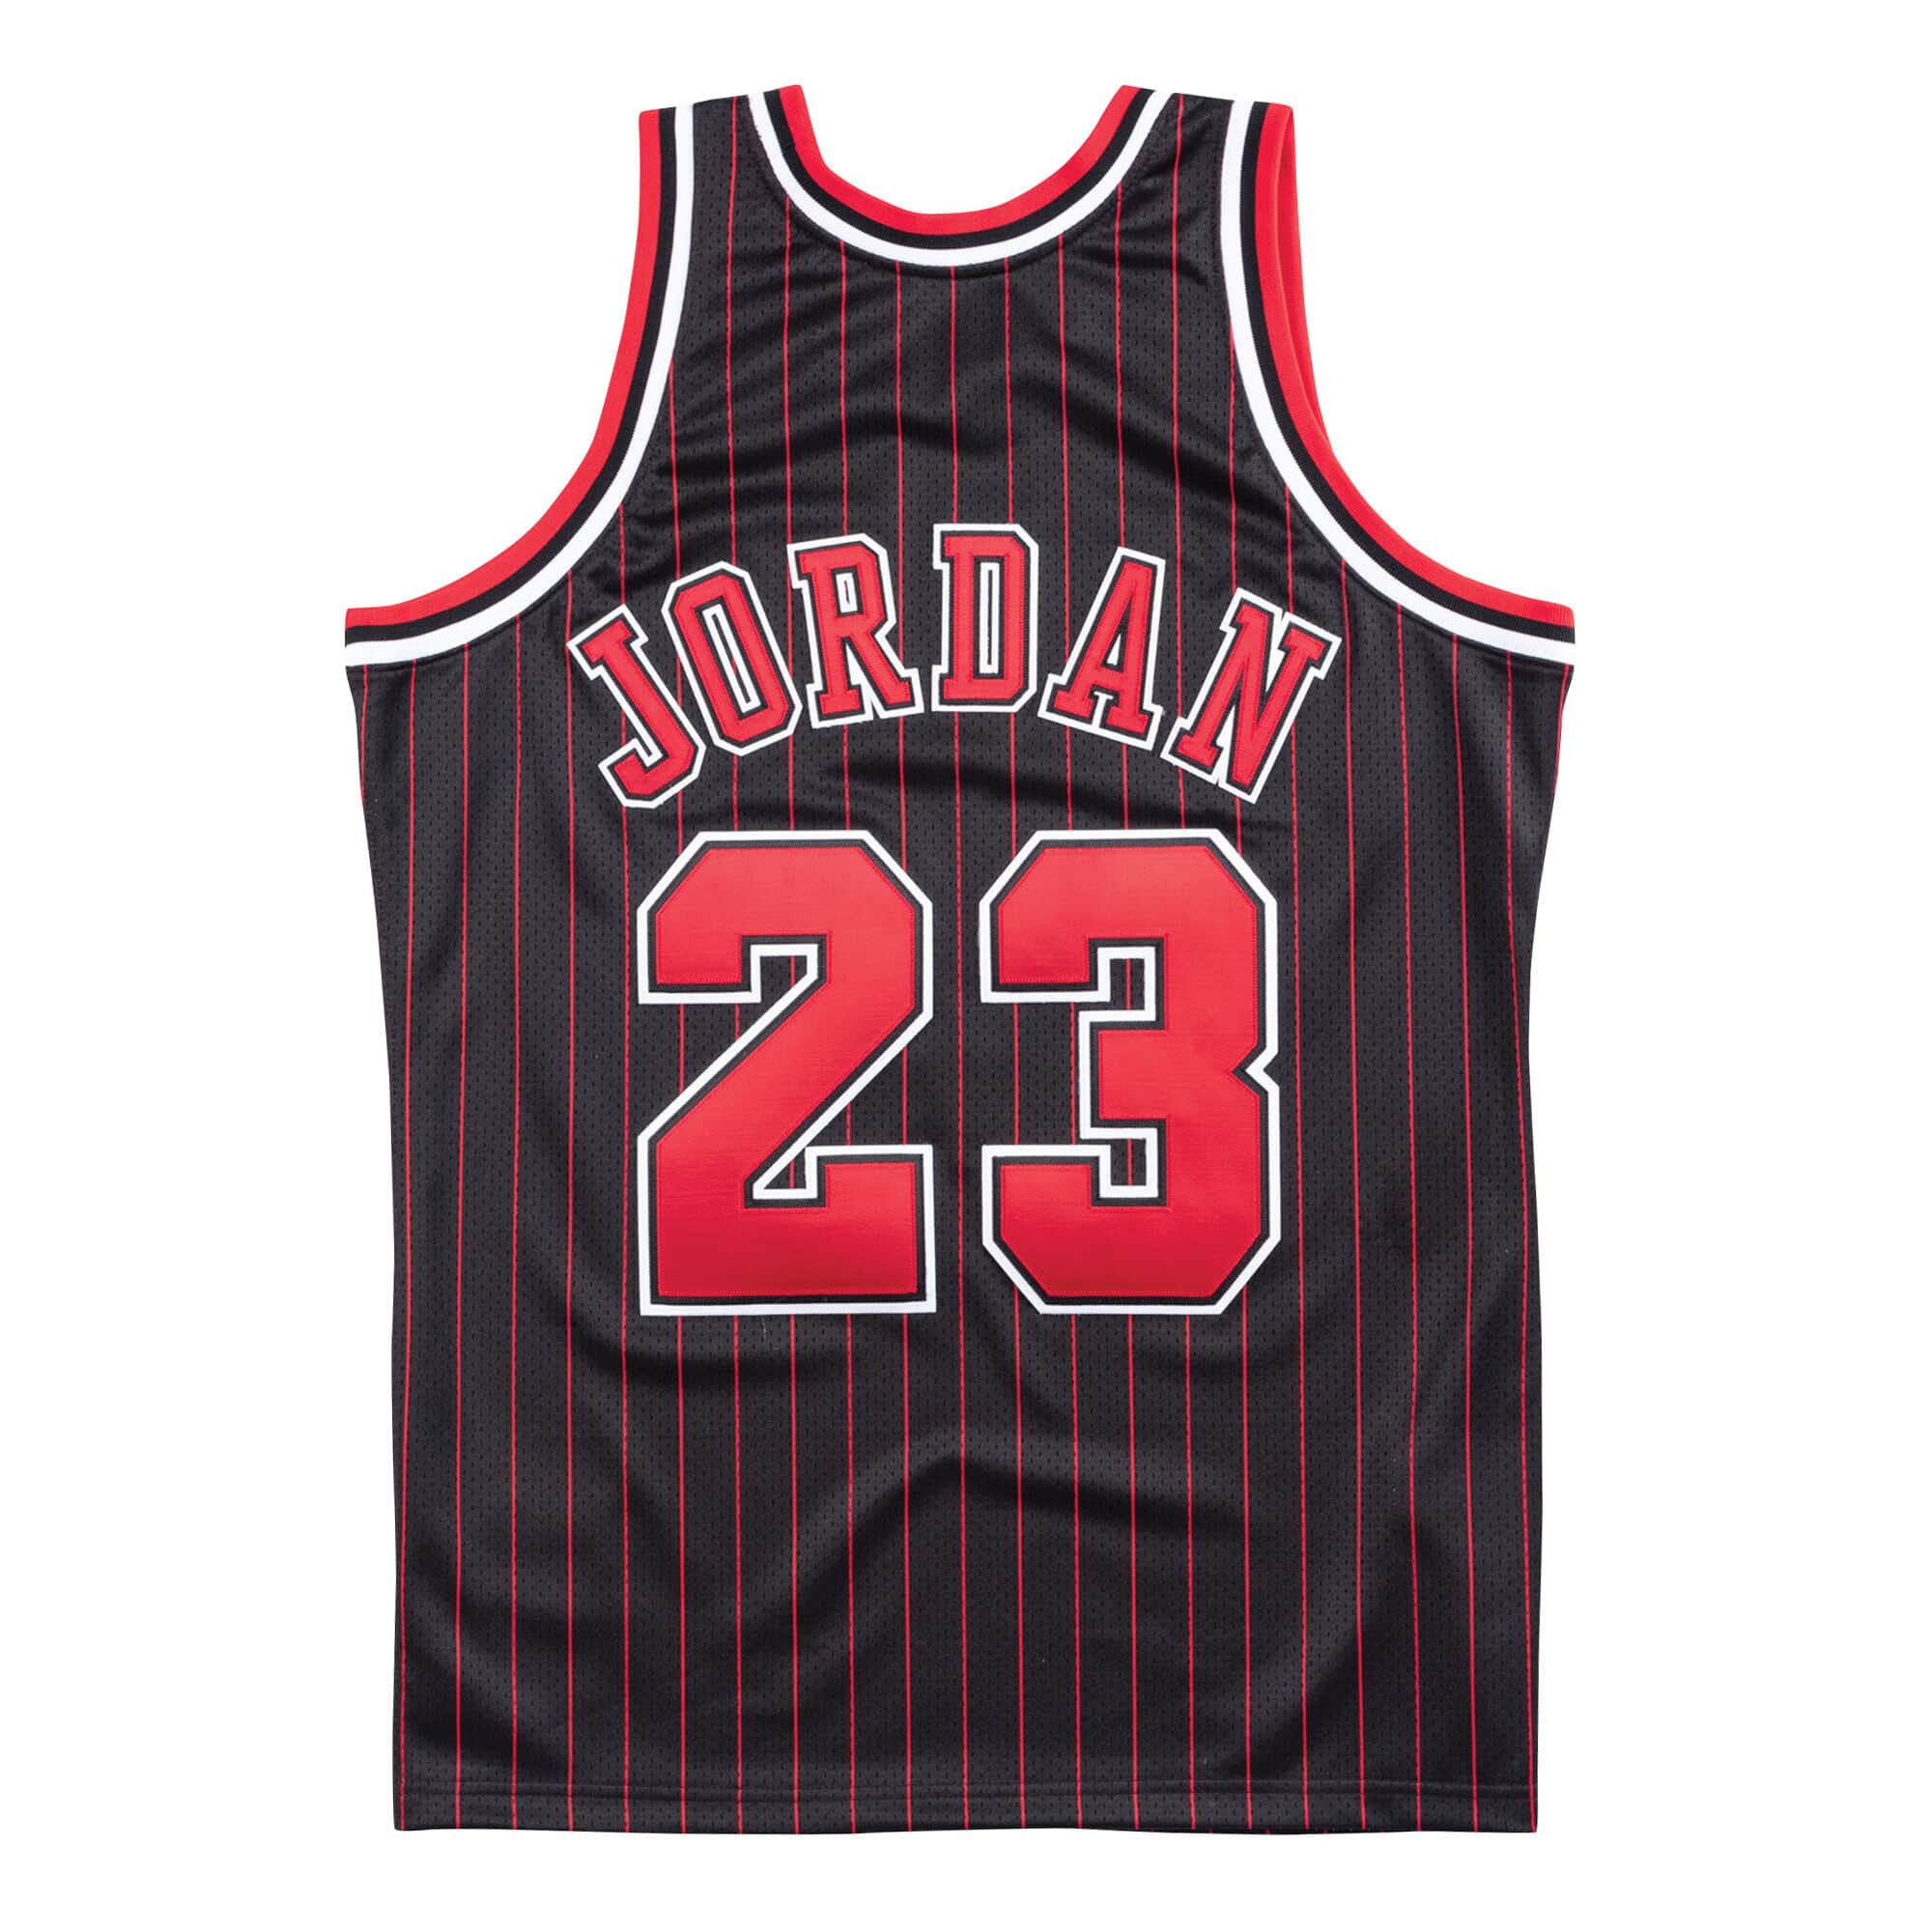 Jordan Supreme Elevation White Black for Sale, Authenticity Guaranteed